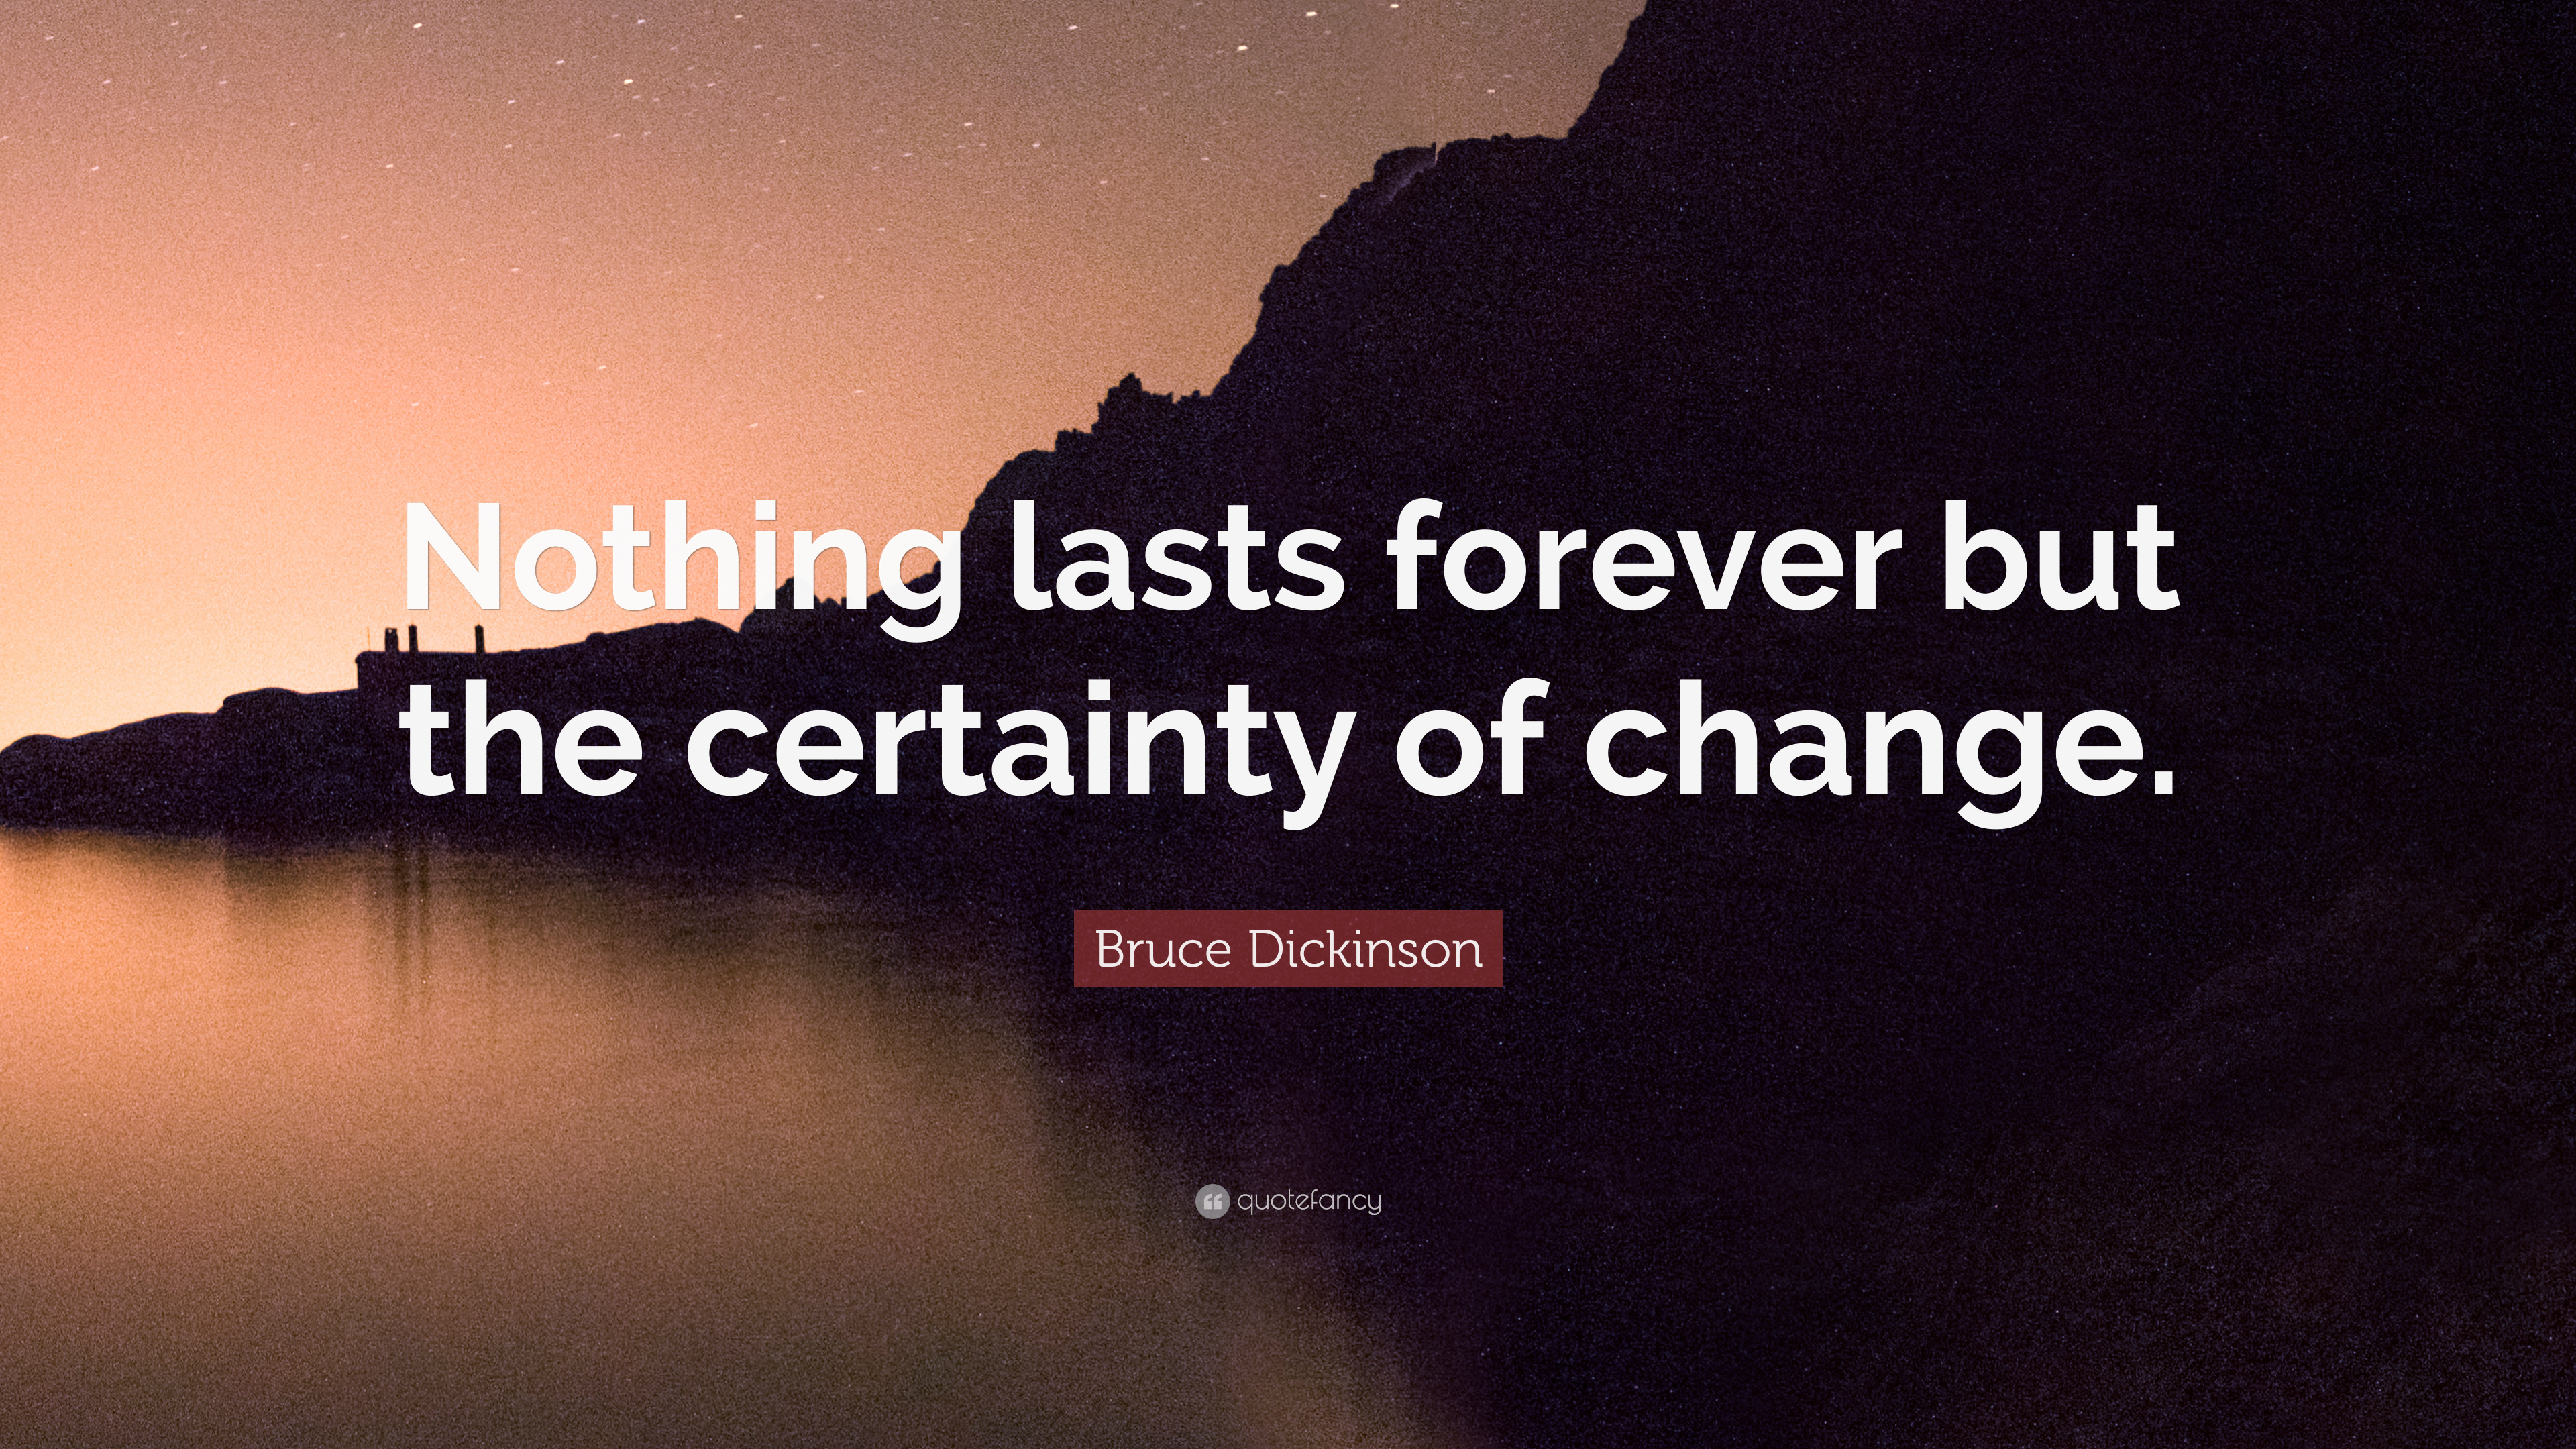 10 Best Bruce Dickinson Quotes